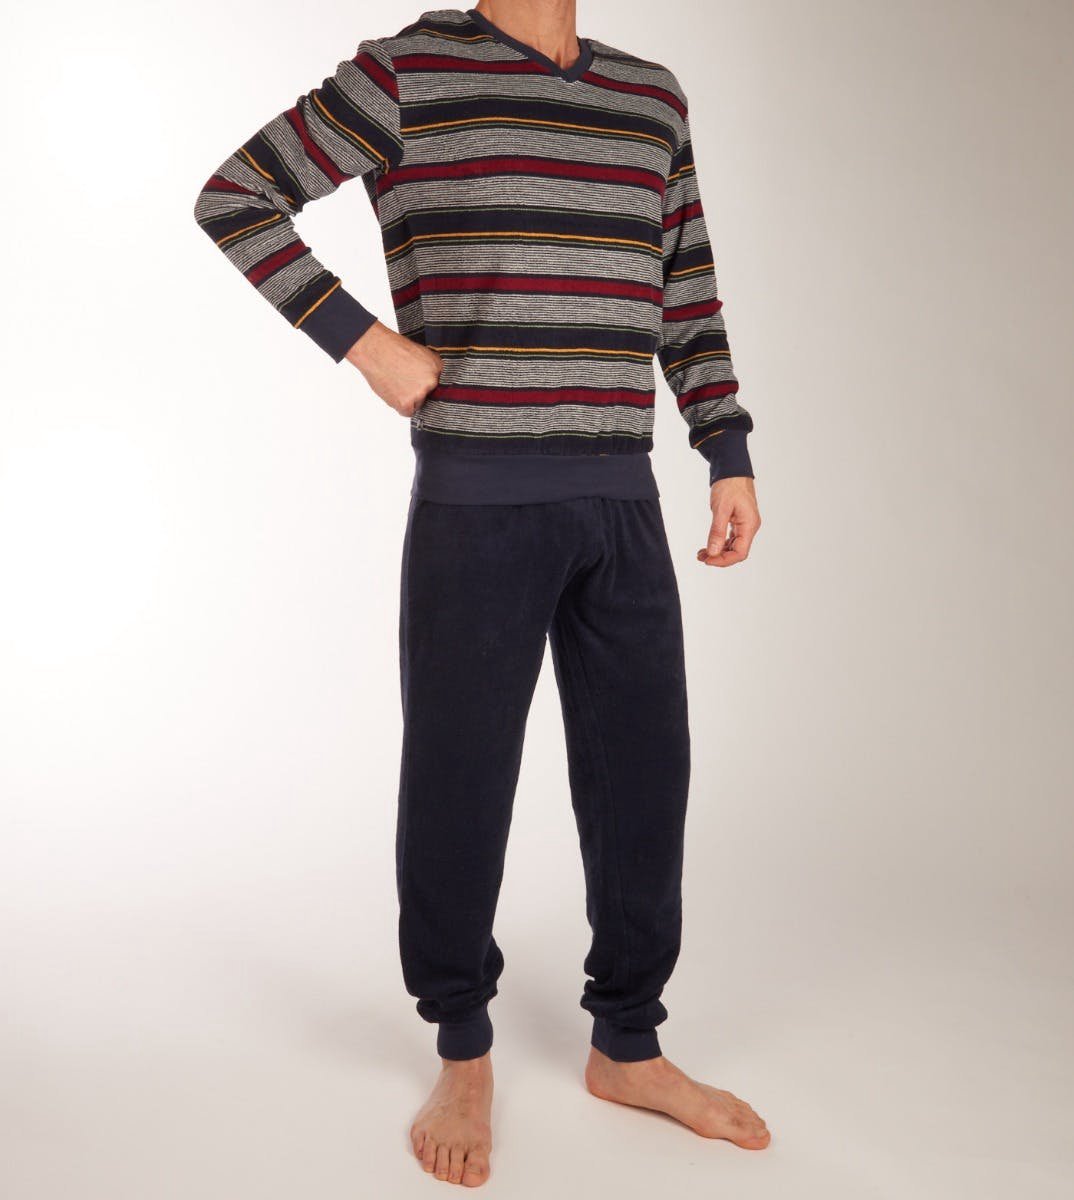 Pastunette for Men Colourful Mannen Pyjamaset - Donkerrood - Maat XL